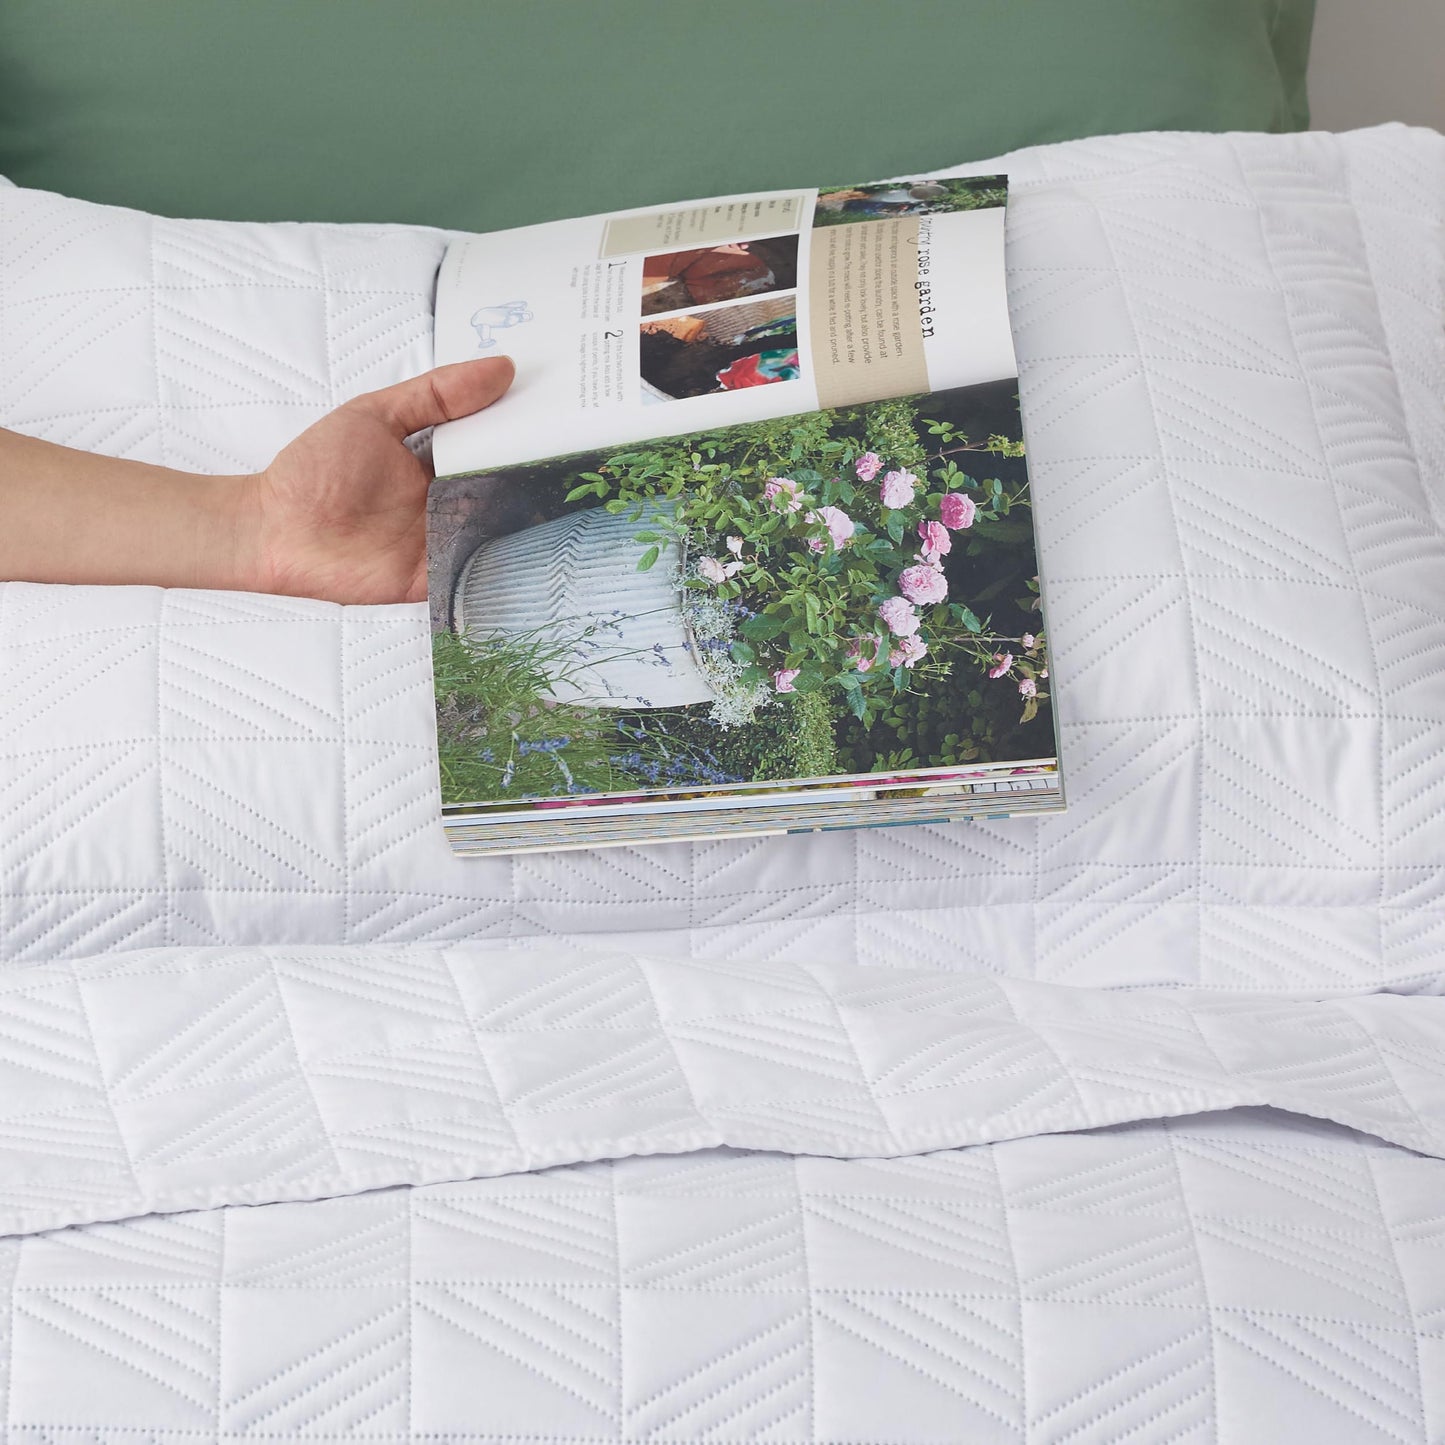 Bedsure Queen Quilt Bedding Set - Soft Ultrasonic Full/Queen Quilt Set - Geometric Bedspread Queen Size - Lightweight Bedding Coverlet for All Seasons (Includes 1 White Quilt, 2 Pillow Shams)